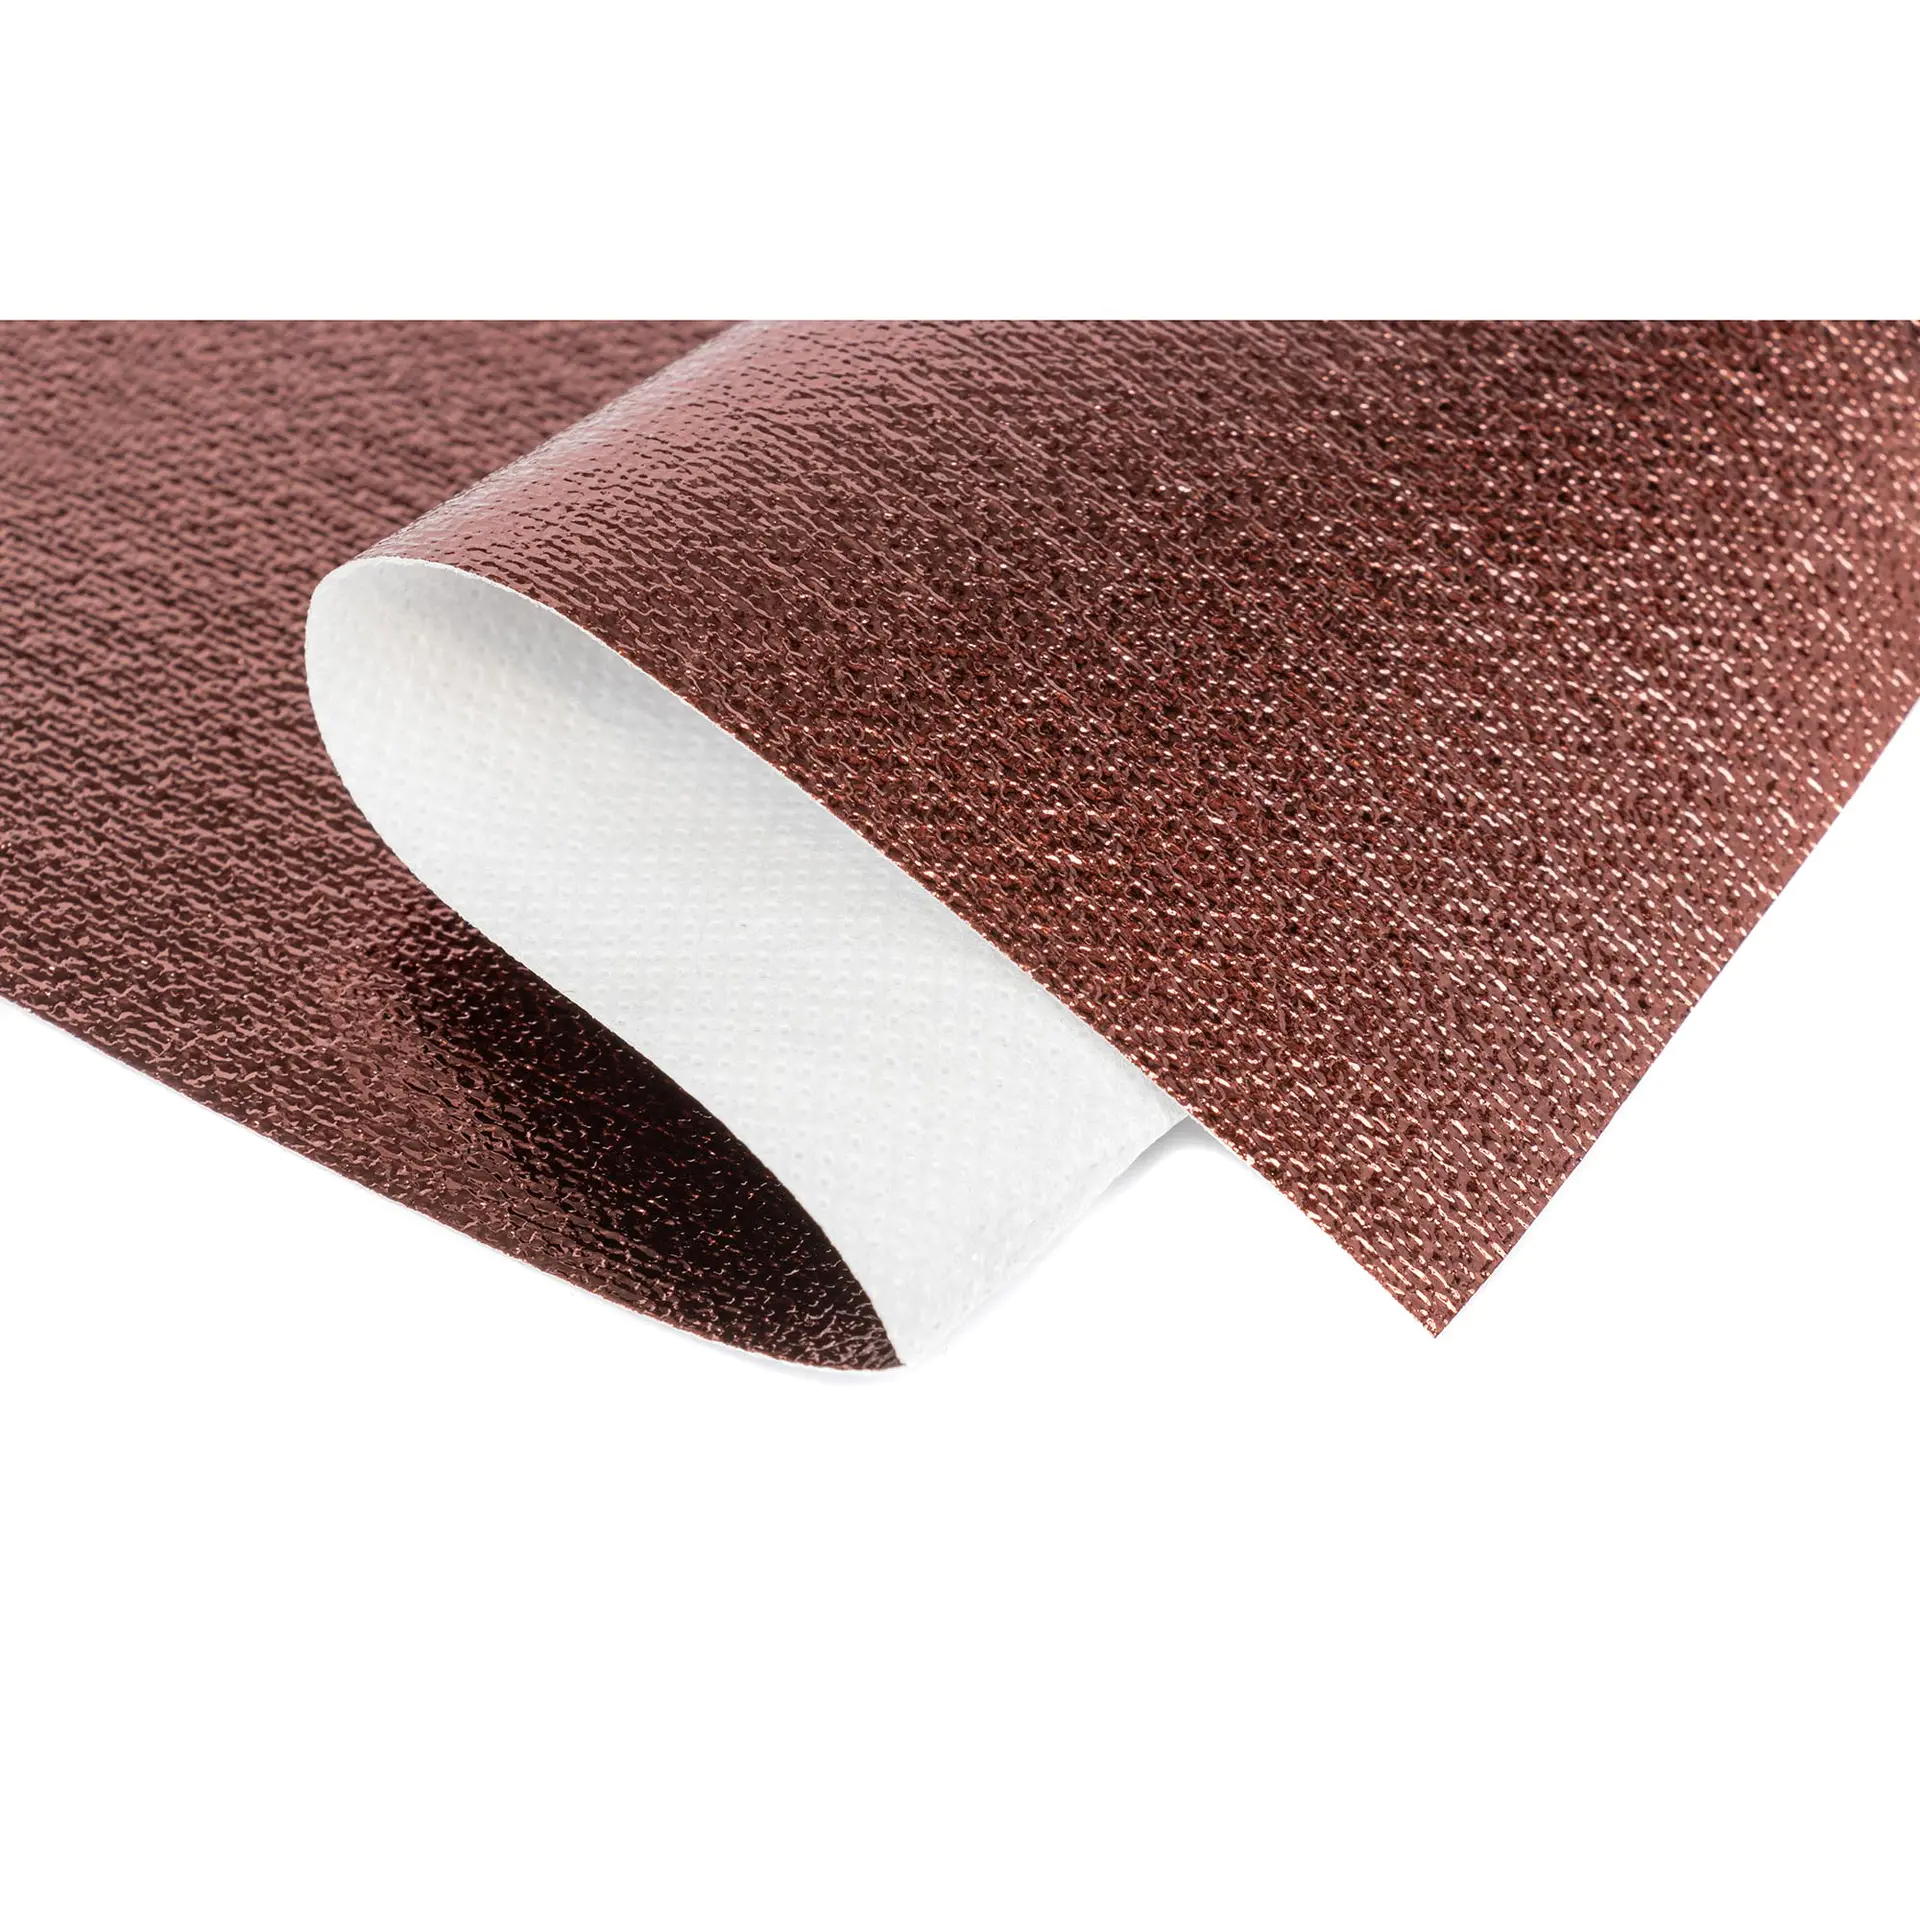 Biodegradable Laminated PP+PET Spunbond Nonwoven Fabric